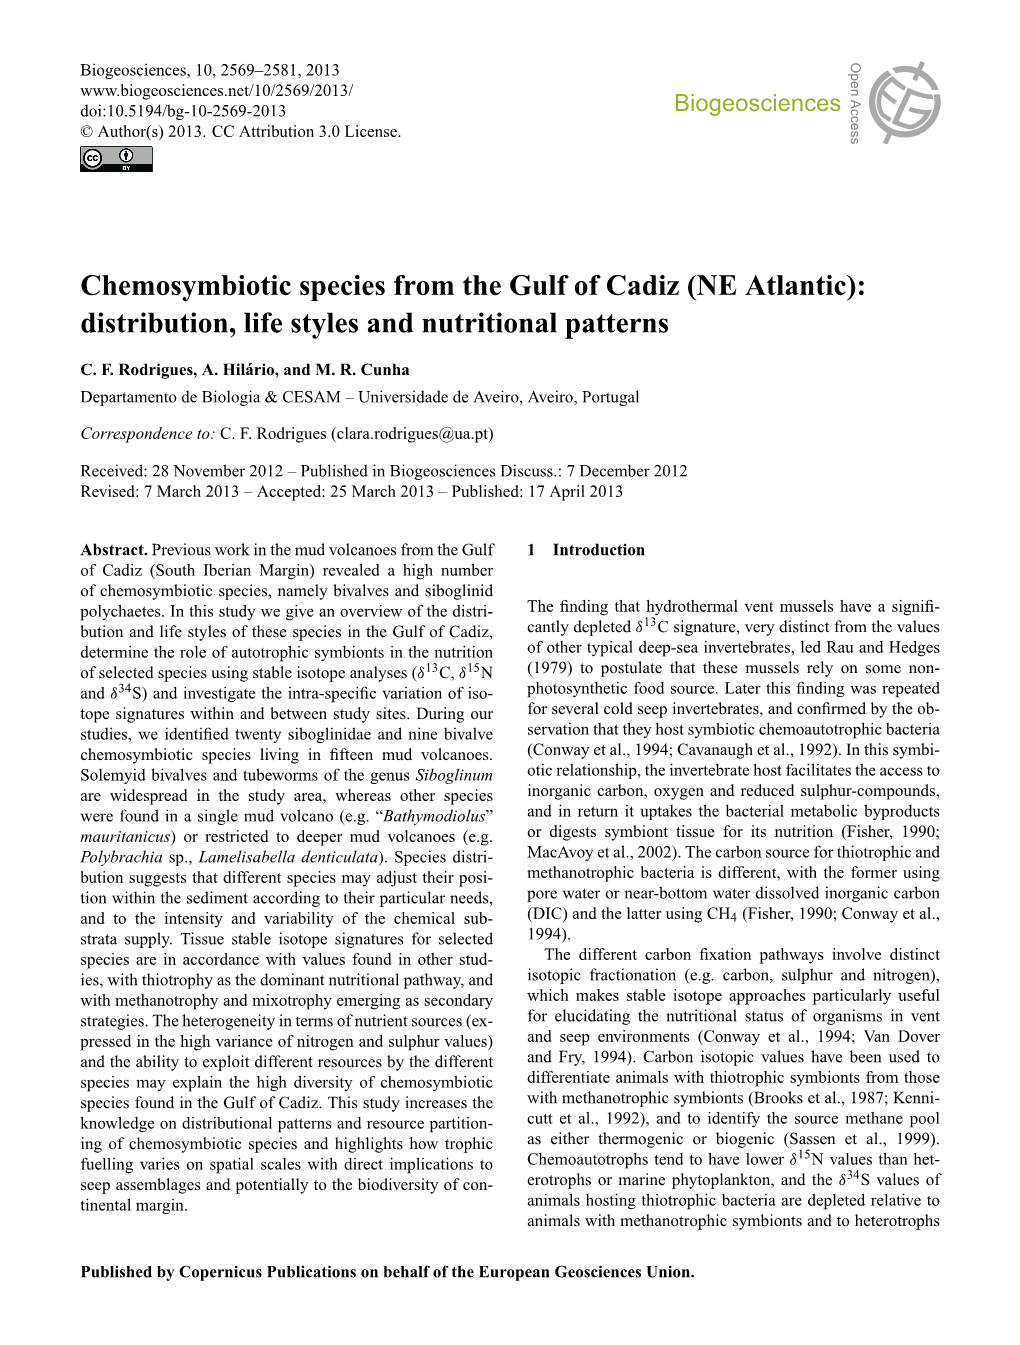 Chemosymbiotic Species from the Gulf of Cadiz (NE Atlantic)